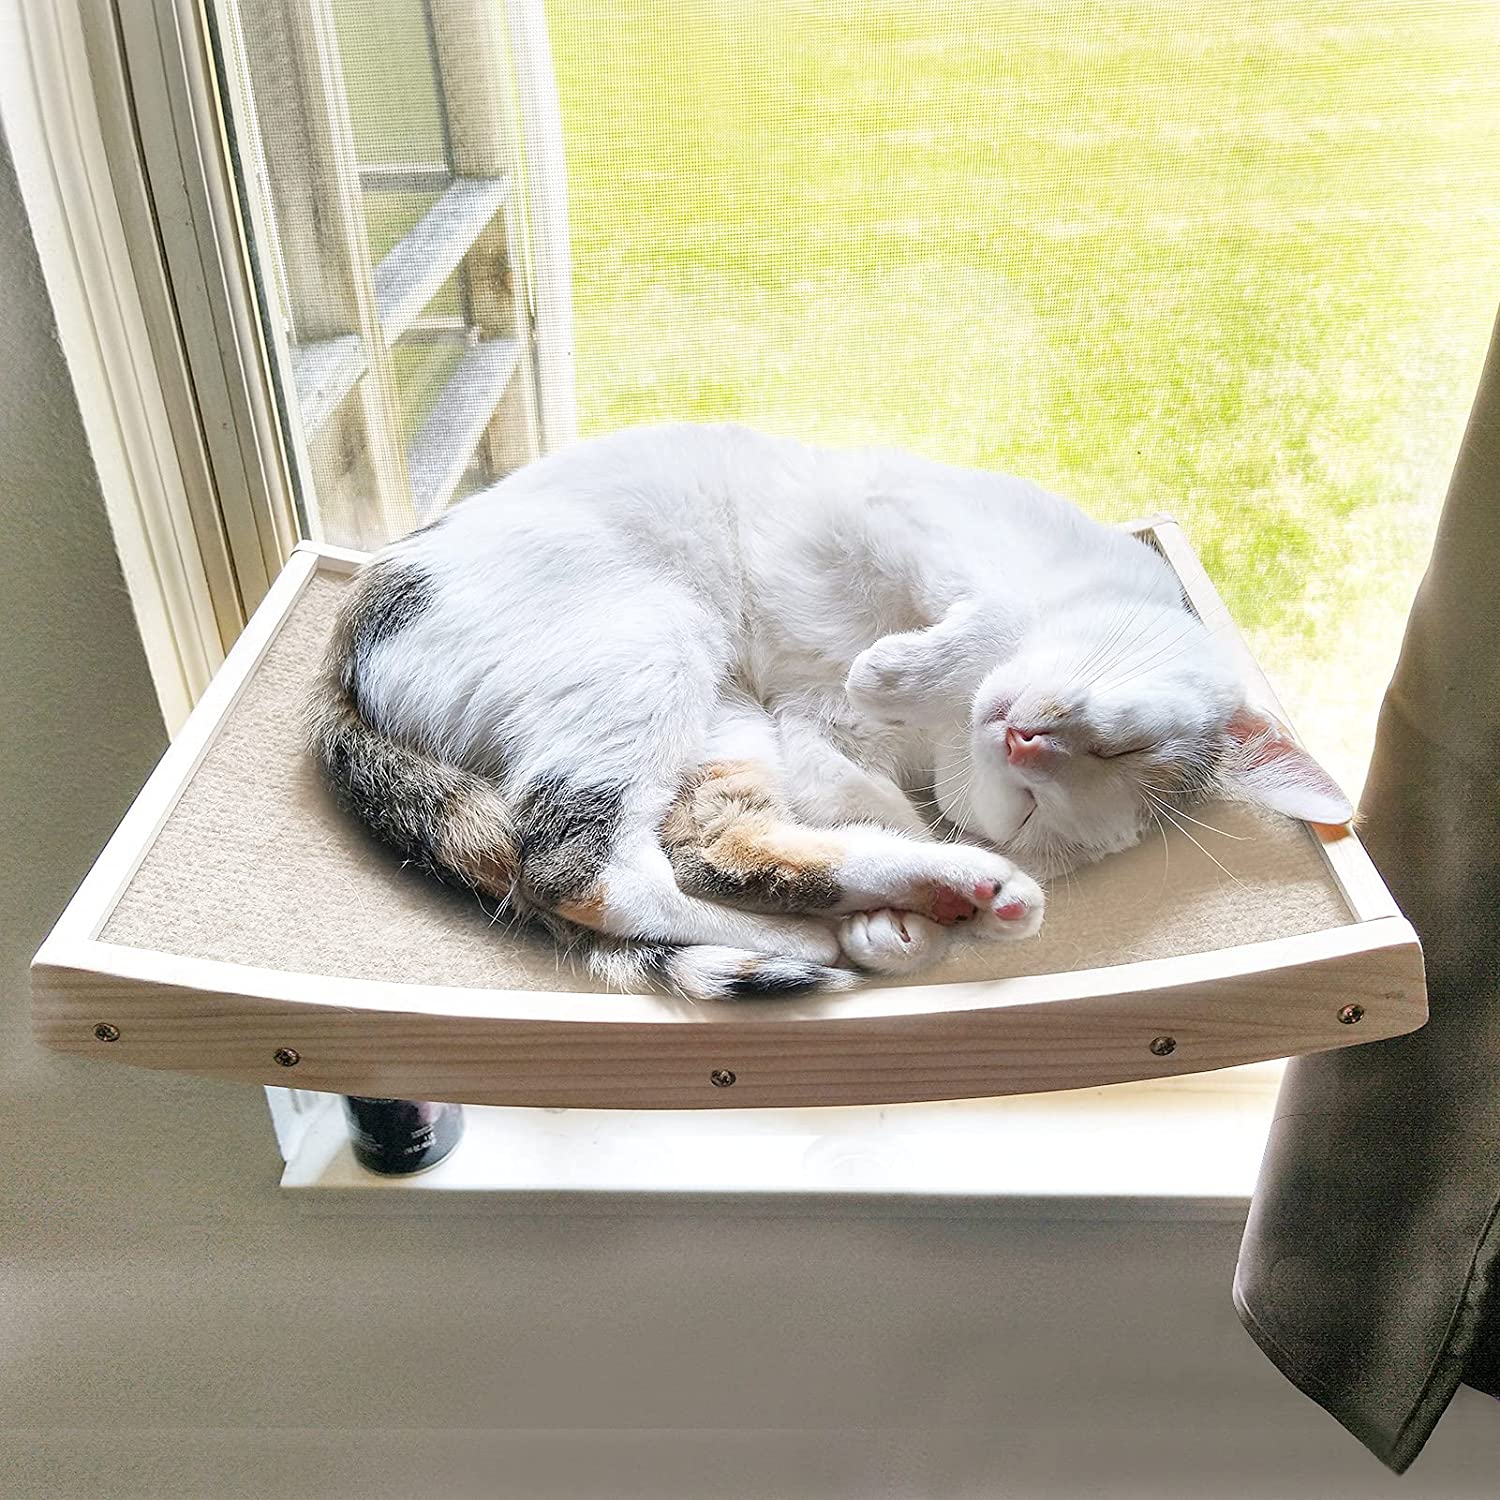 https://catromance.com/wp-content/uploads/2018/06/joyo-cat-window-perch.jpg